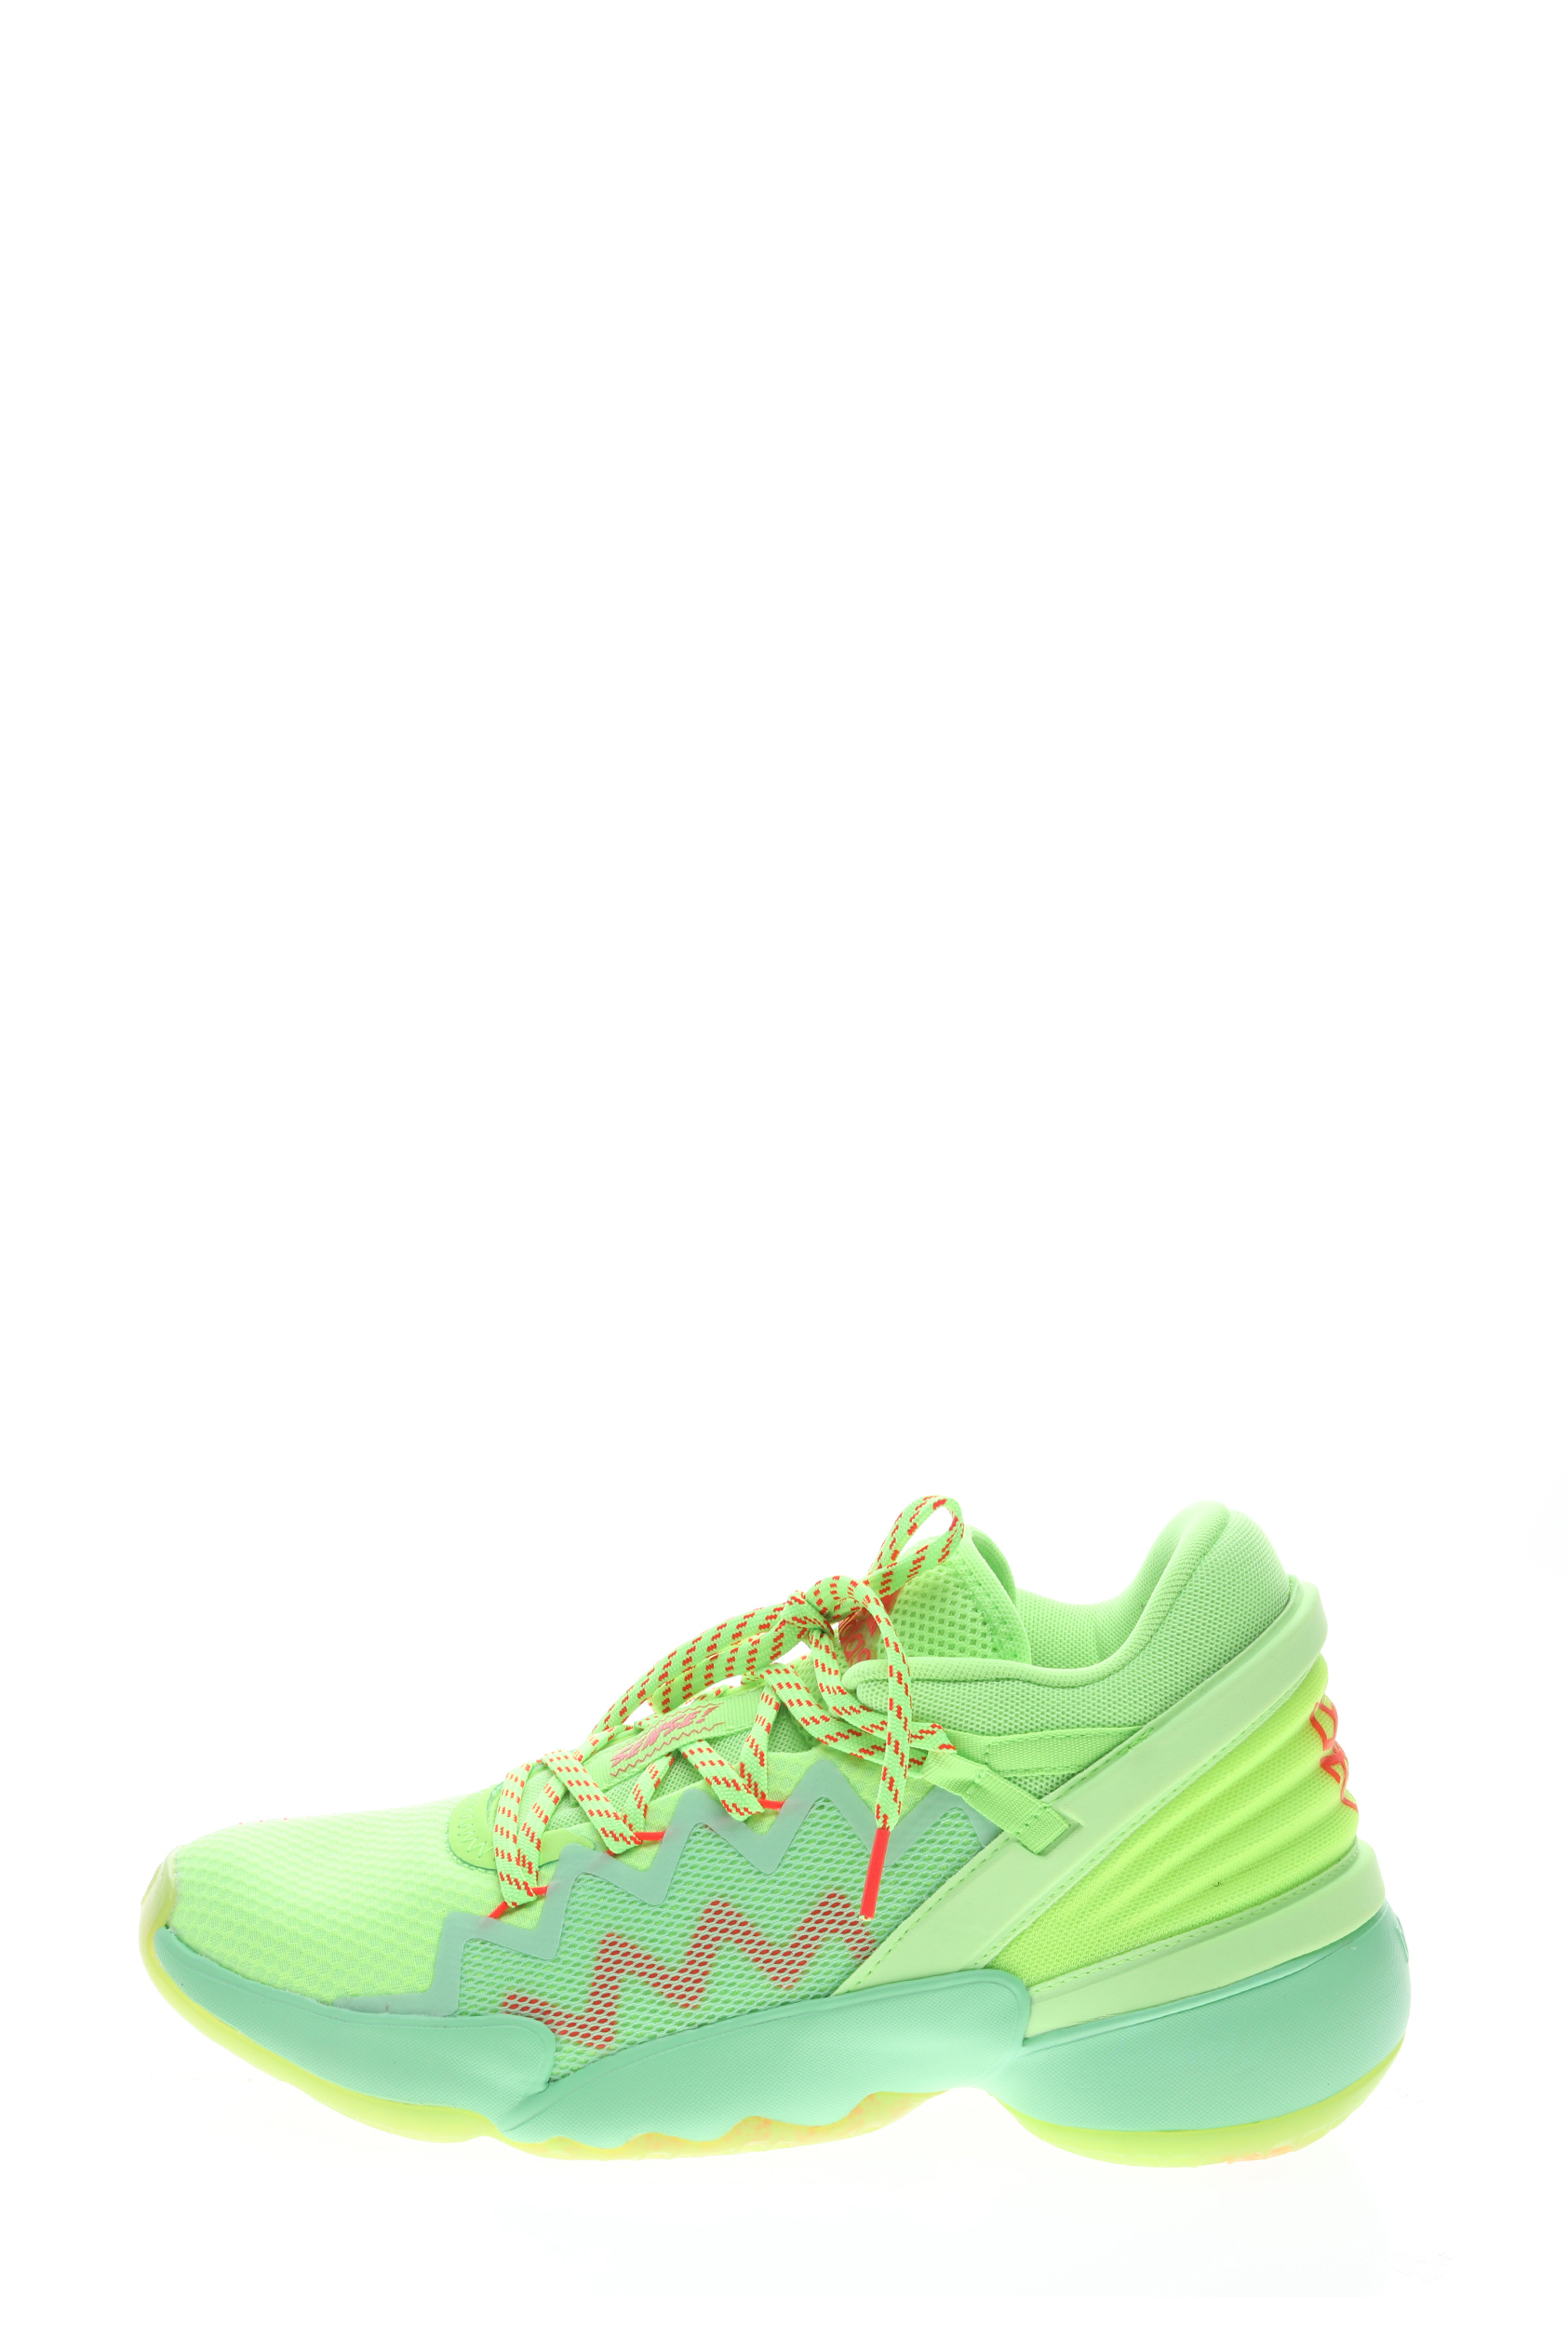 adidas Performance – Unisex παπούτσια basketball adidas Performance D.O.N. Issue 2 πράσινα 1793959.0-0063